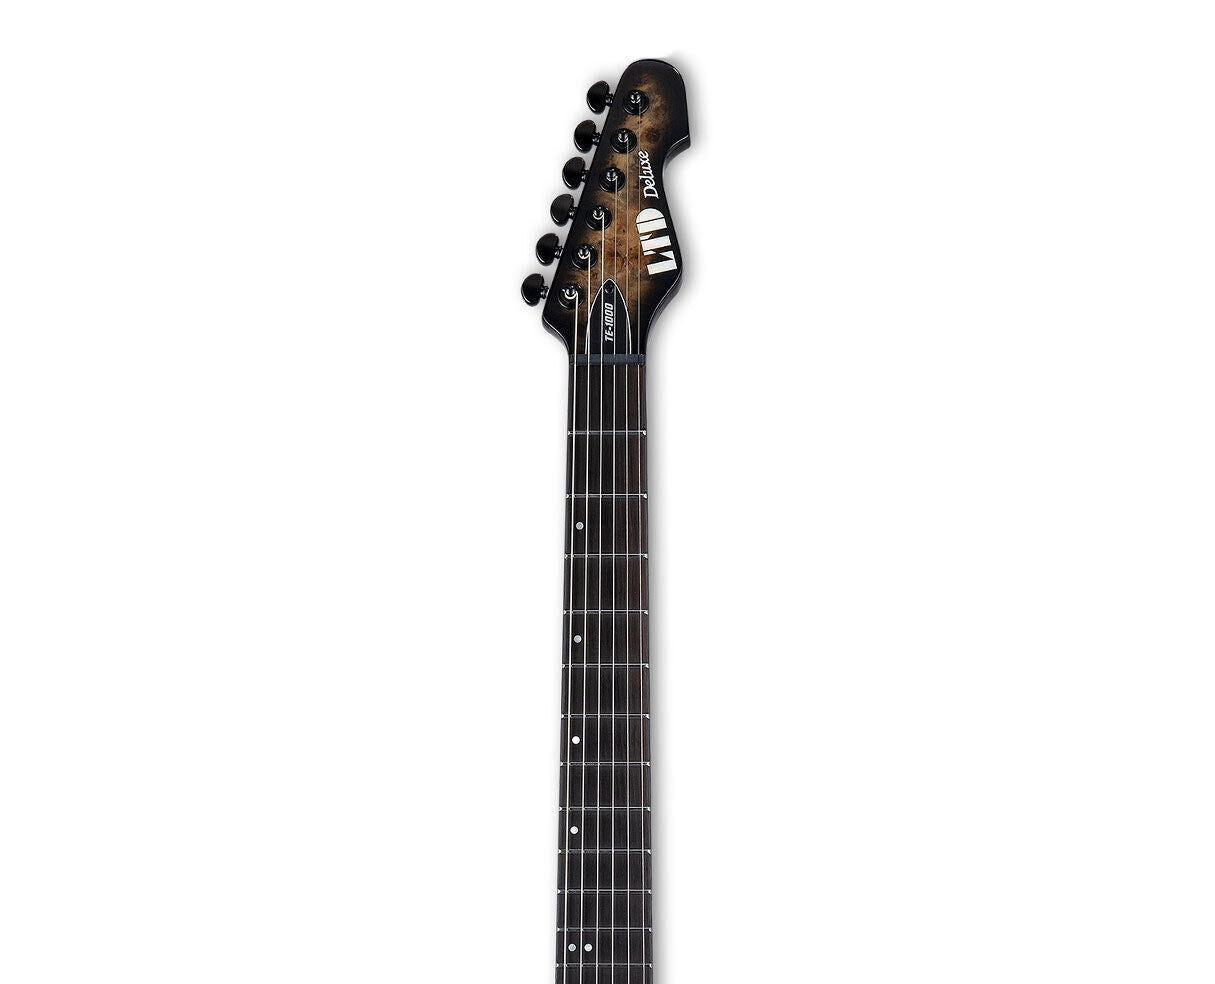 ESP LTD TE-1000 EverTune Electric Guitar - Charcoal Burst